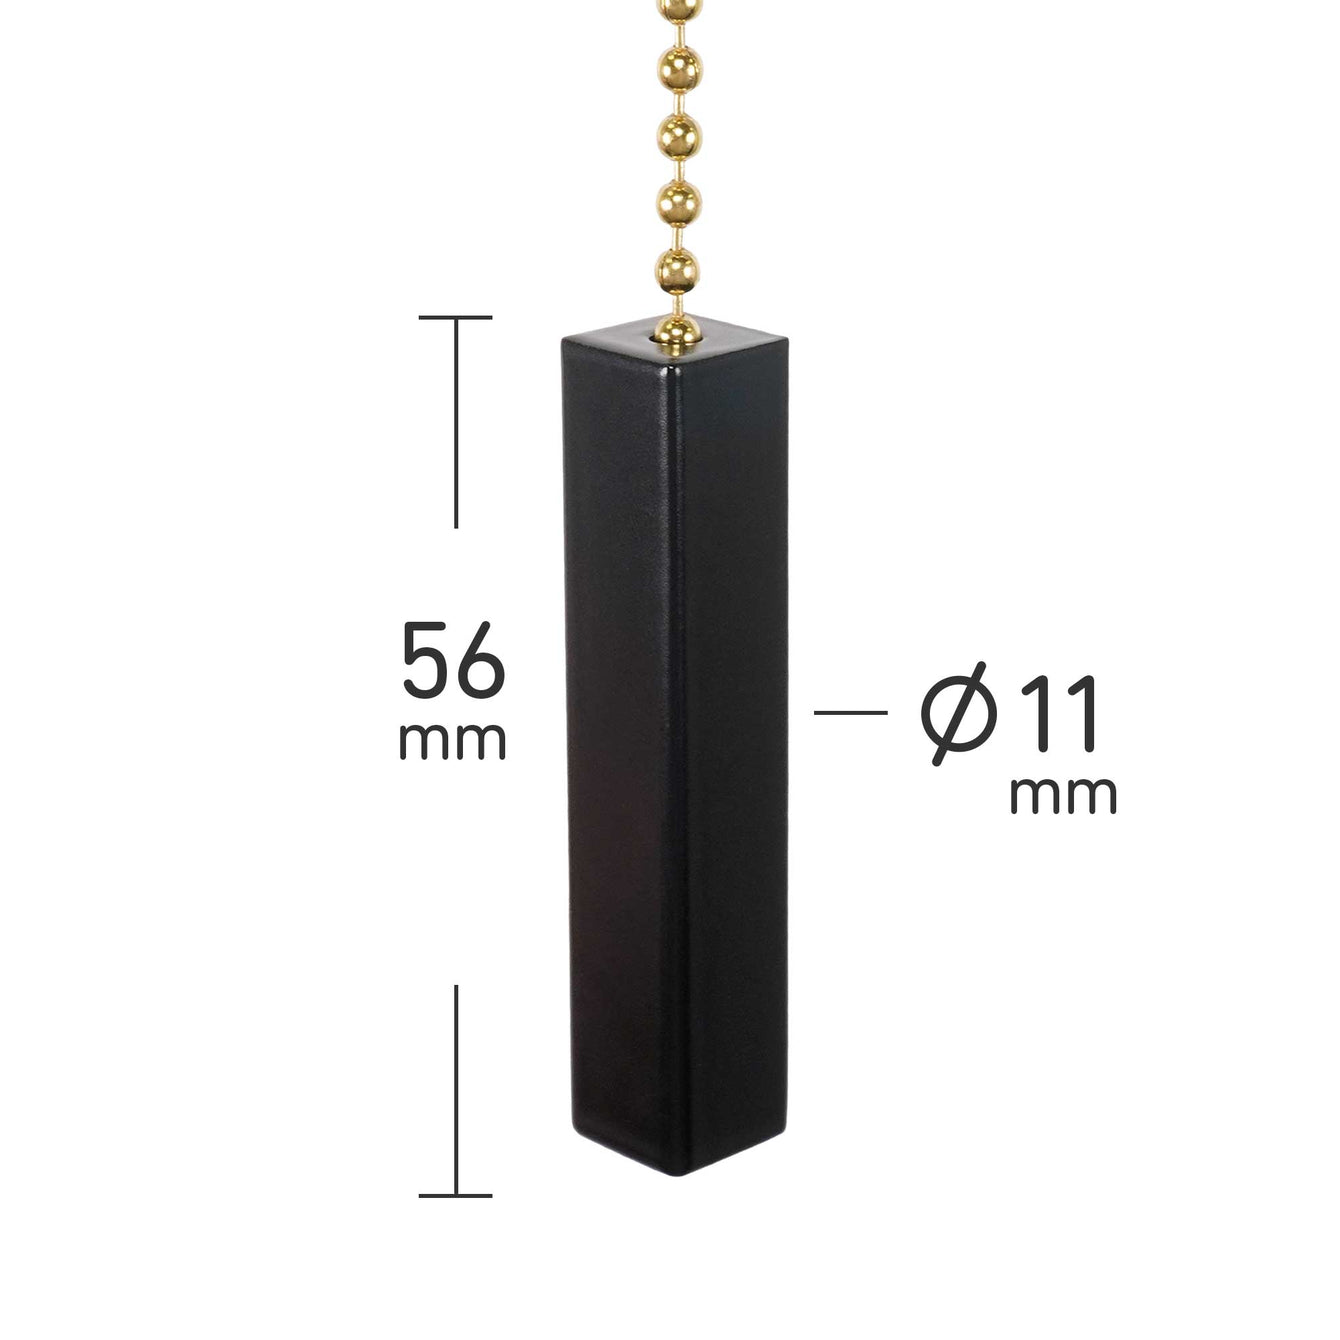 ElekTek Premium Brushed Brass Bathroom Light Pull Cord Switch Kit with Pull Chain Handle Black Cylinder / Black